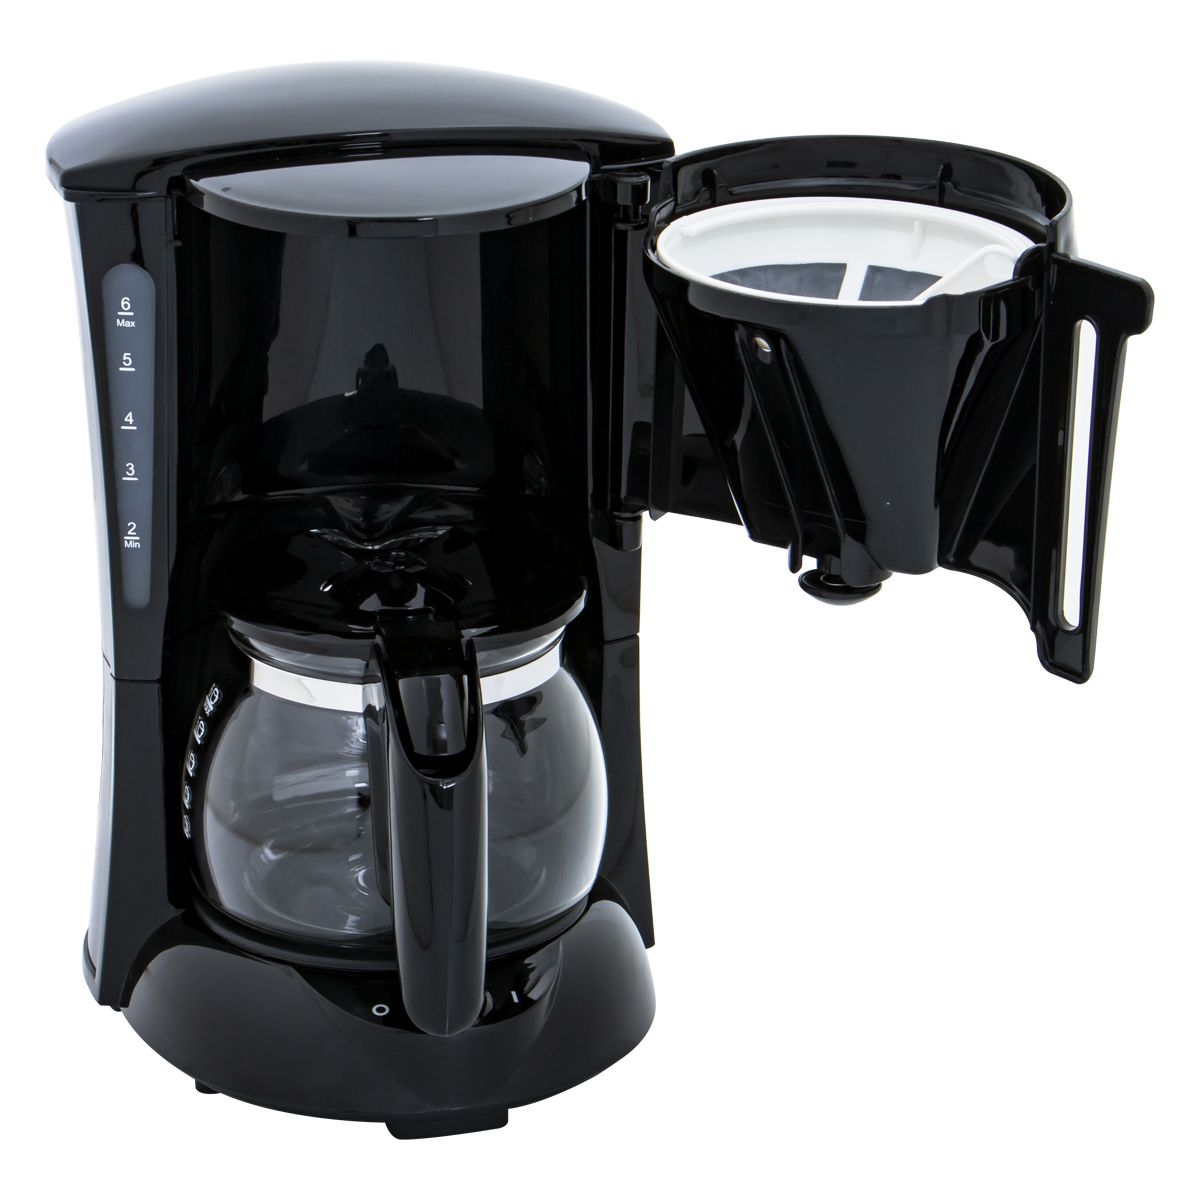  Cafetera térmica de 6 tazas: cafetera de goteo con temporizador  programable, control de fuerza de preparación, cafetera de acero inoxidable  y filtro permanente, sistema antigoteo inteligente, máquina de café  automática para